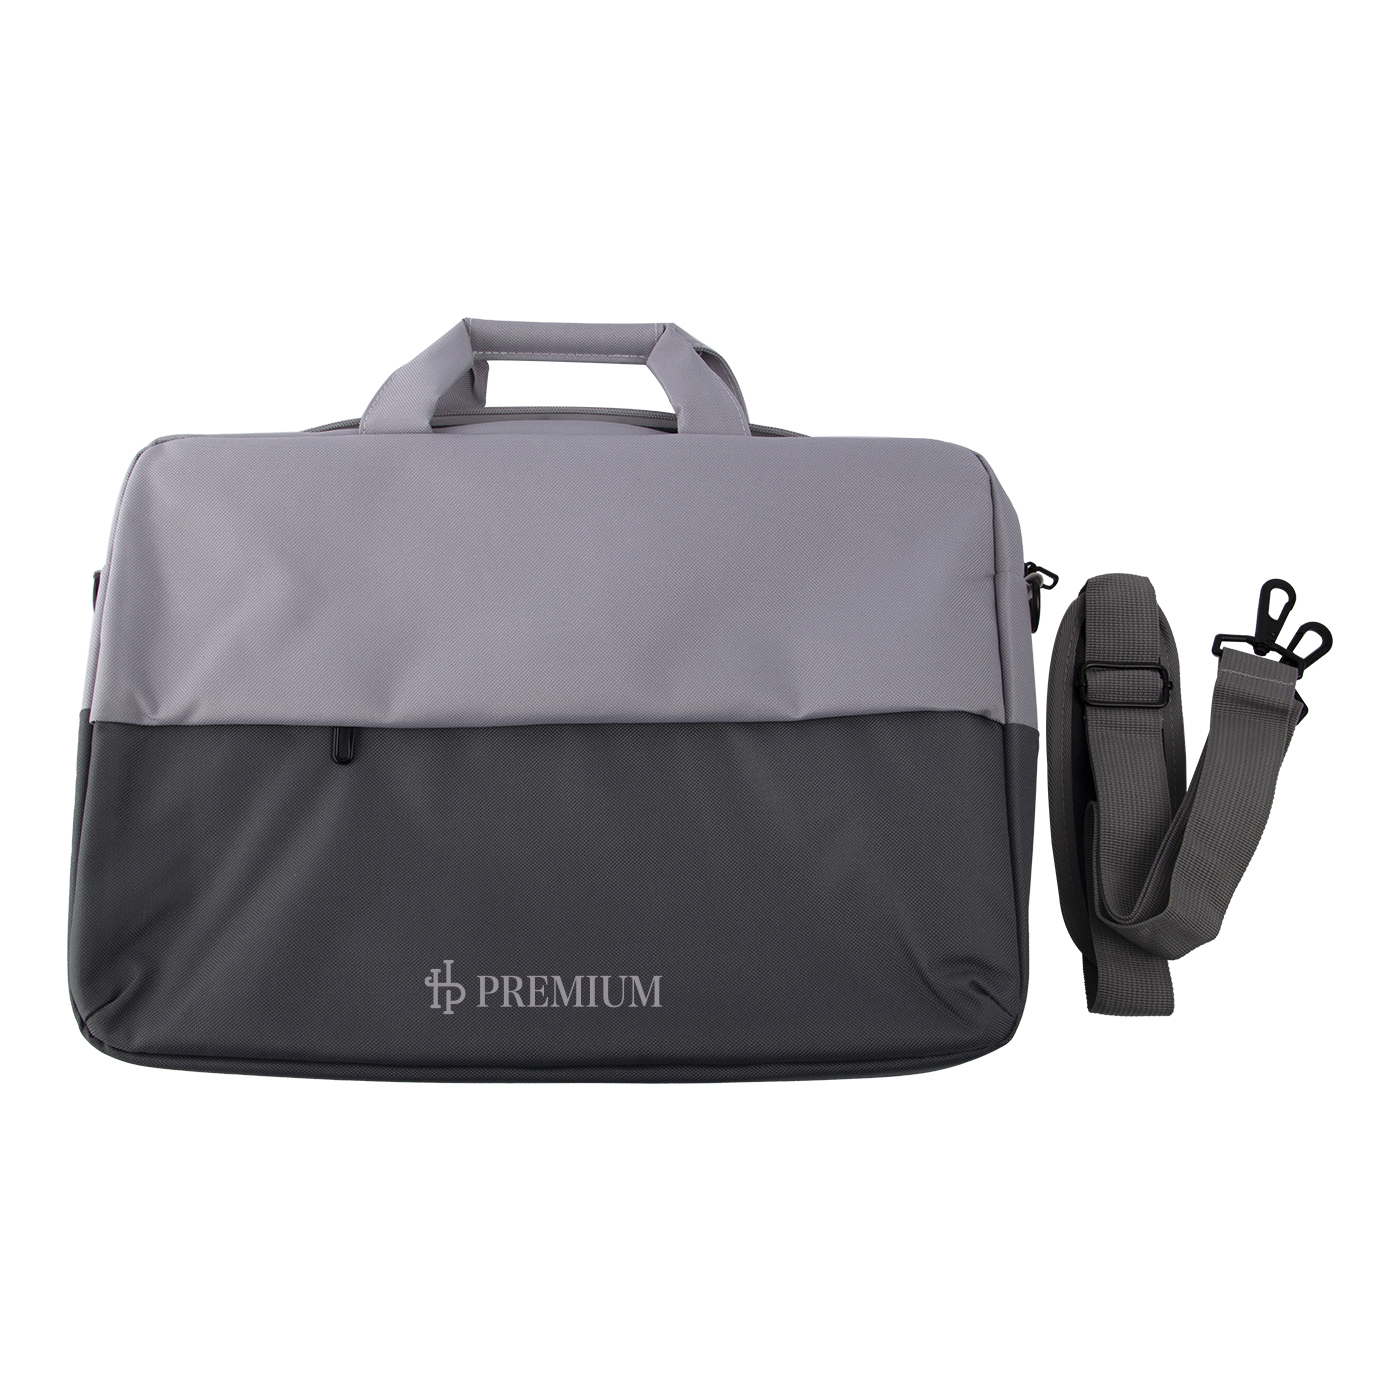 Portable Oxford Cloth Business Laptop Bag1